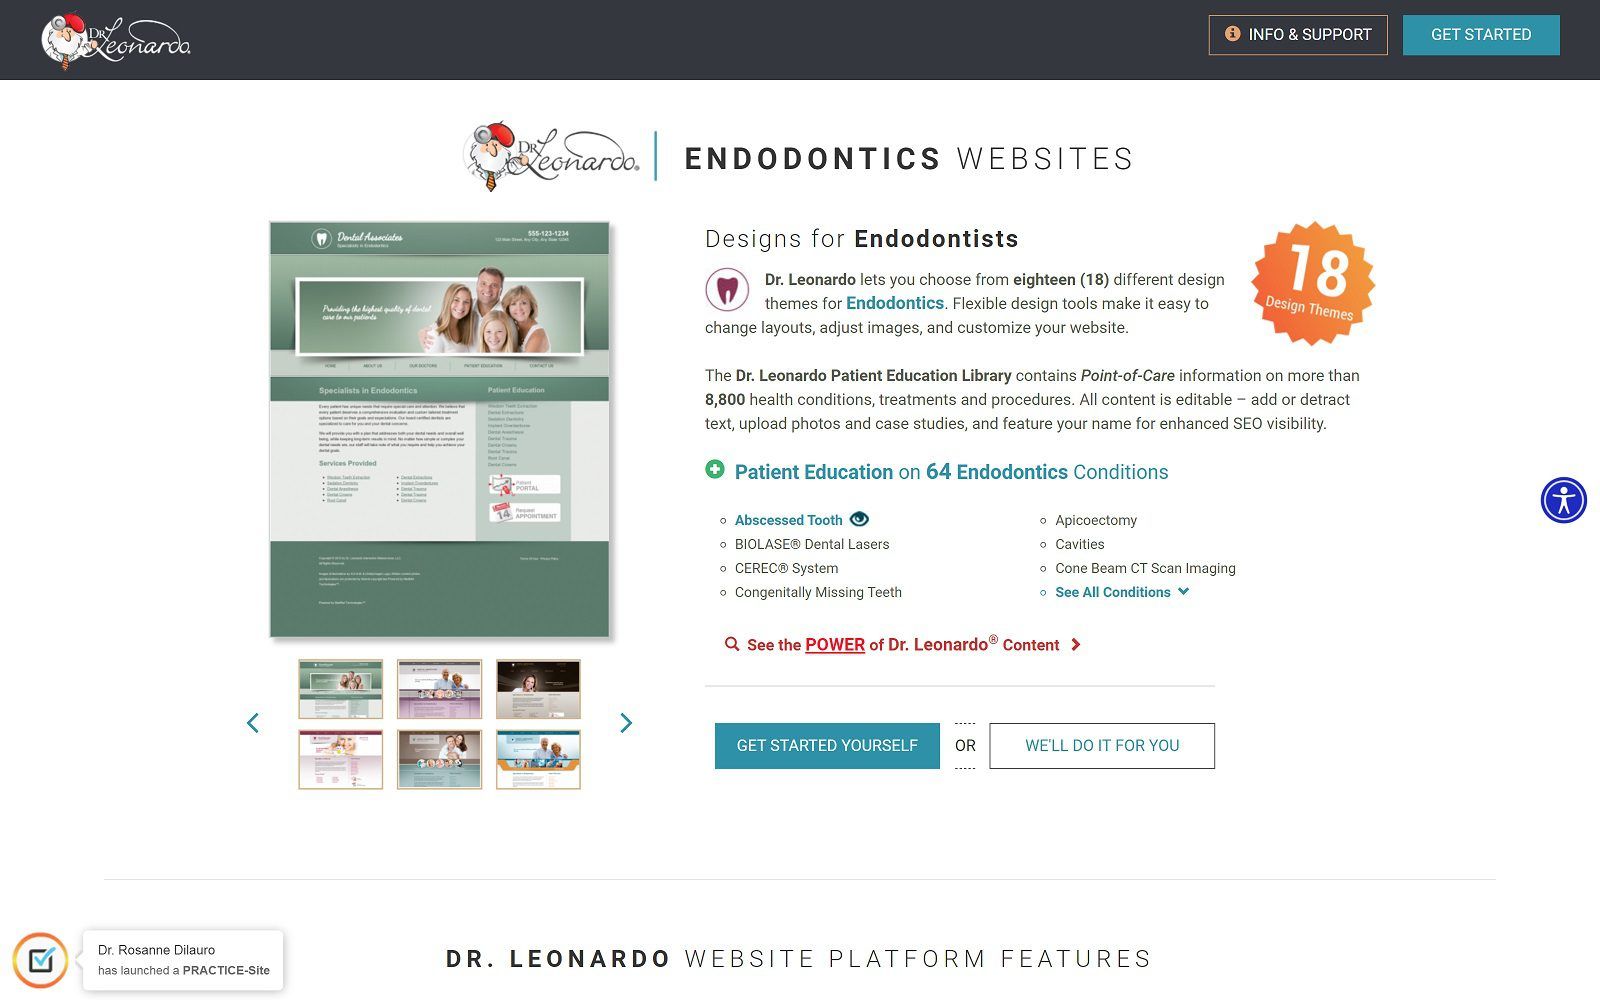 Dr. Leonardo interactive webservices, llc.